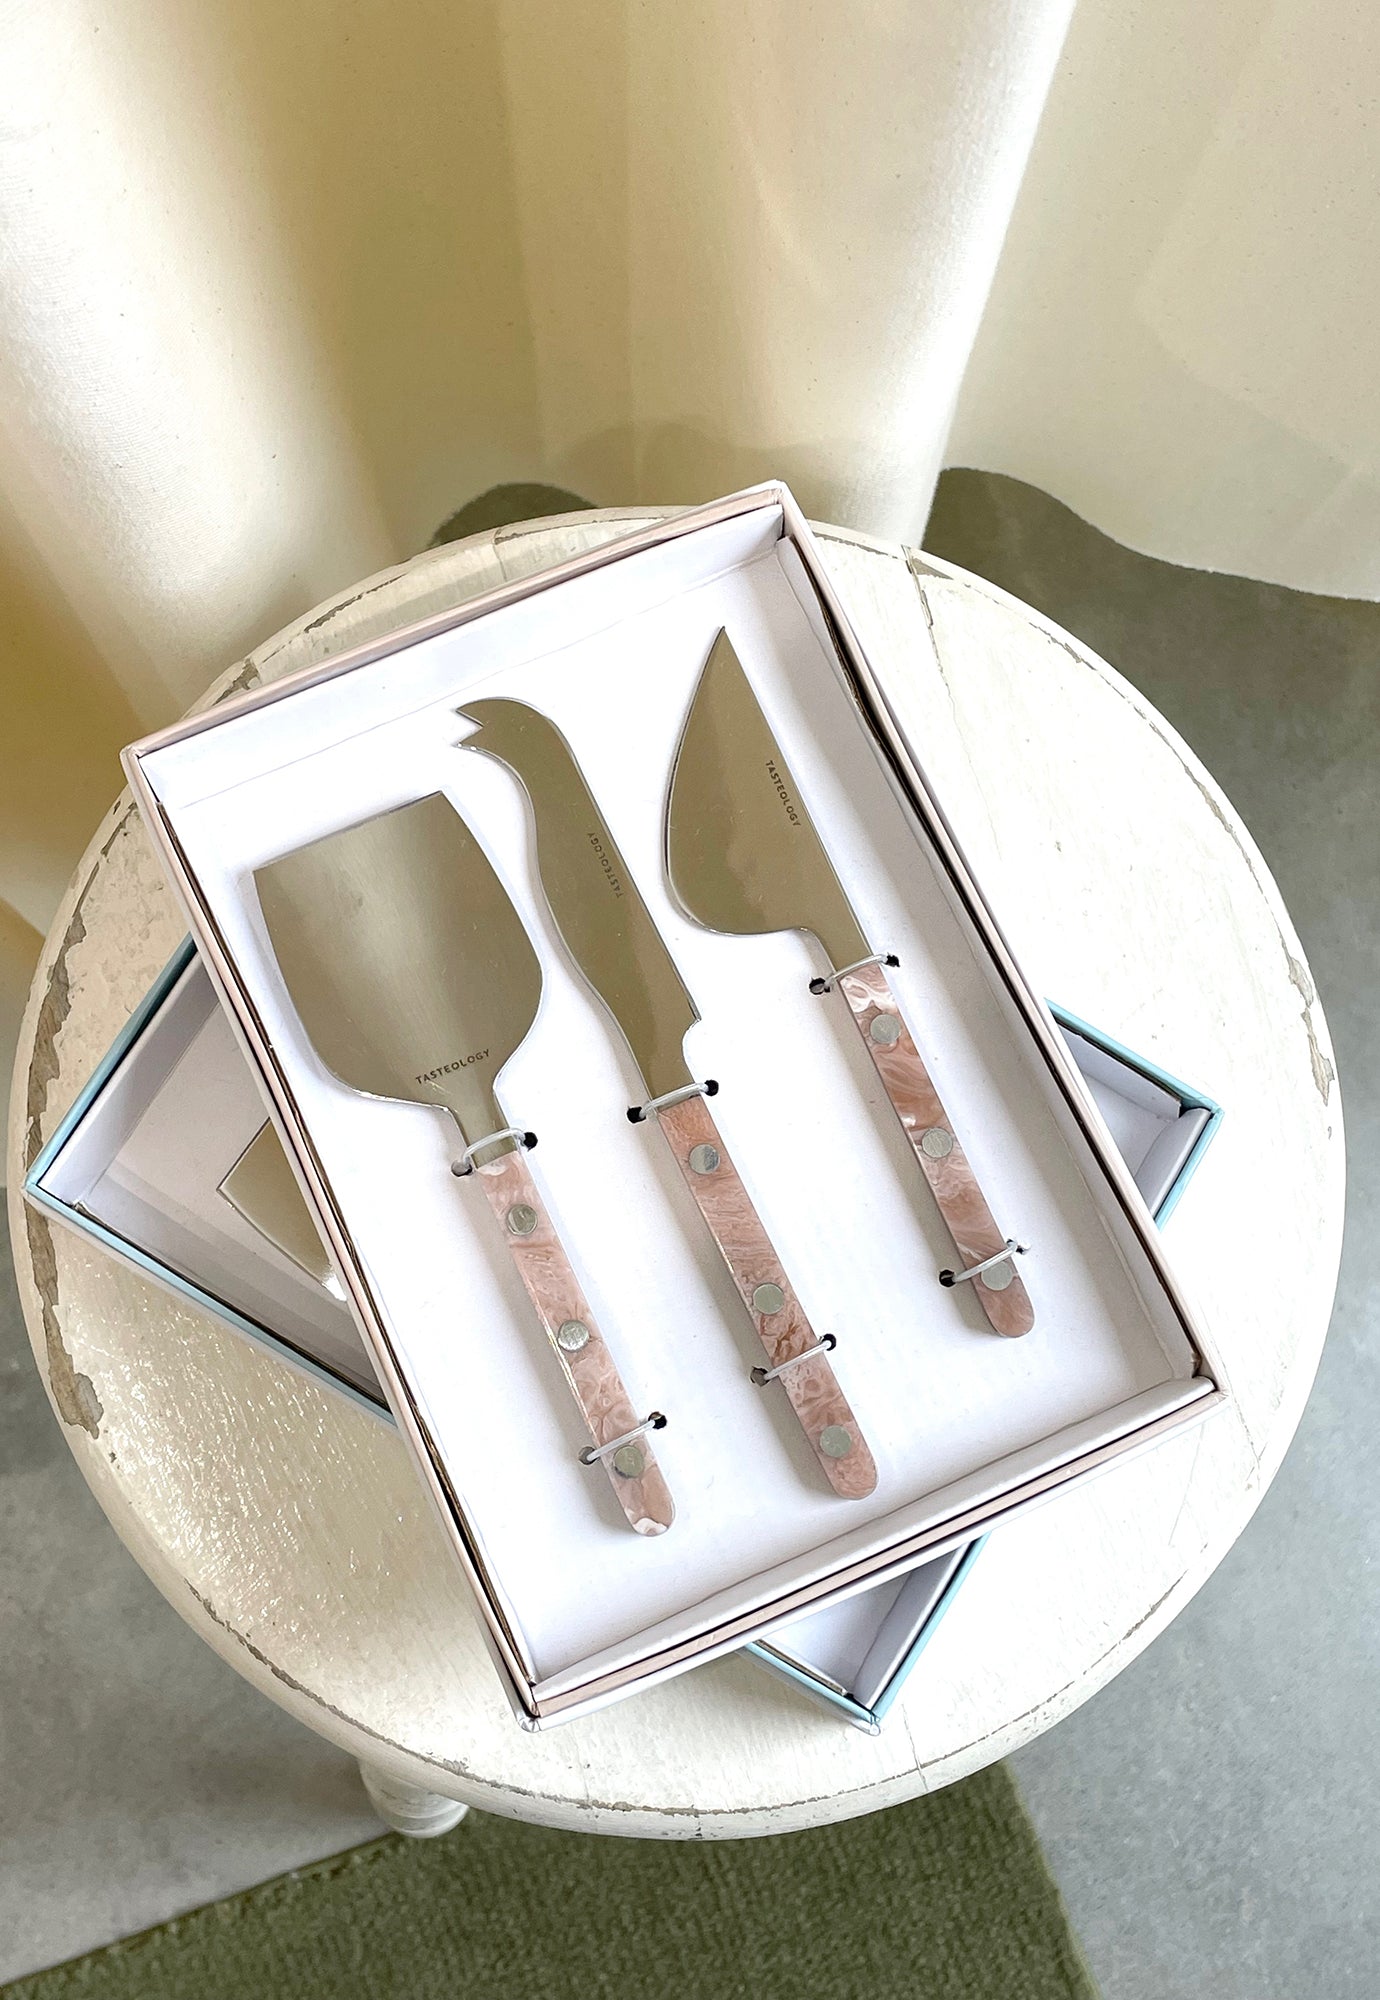 tasteology - cheese knives - set of 3